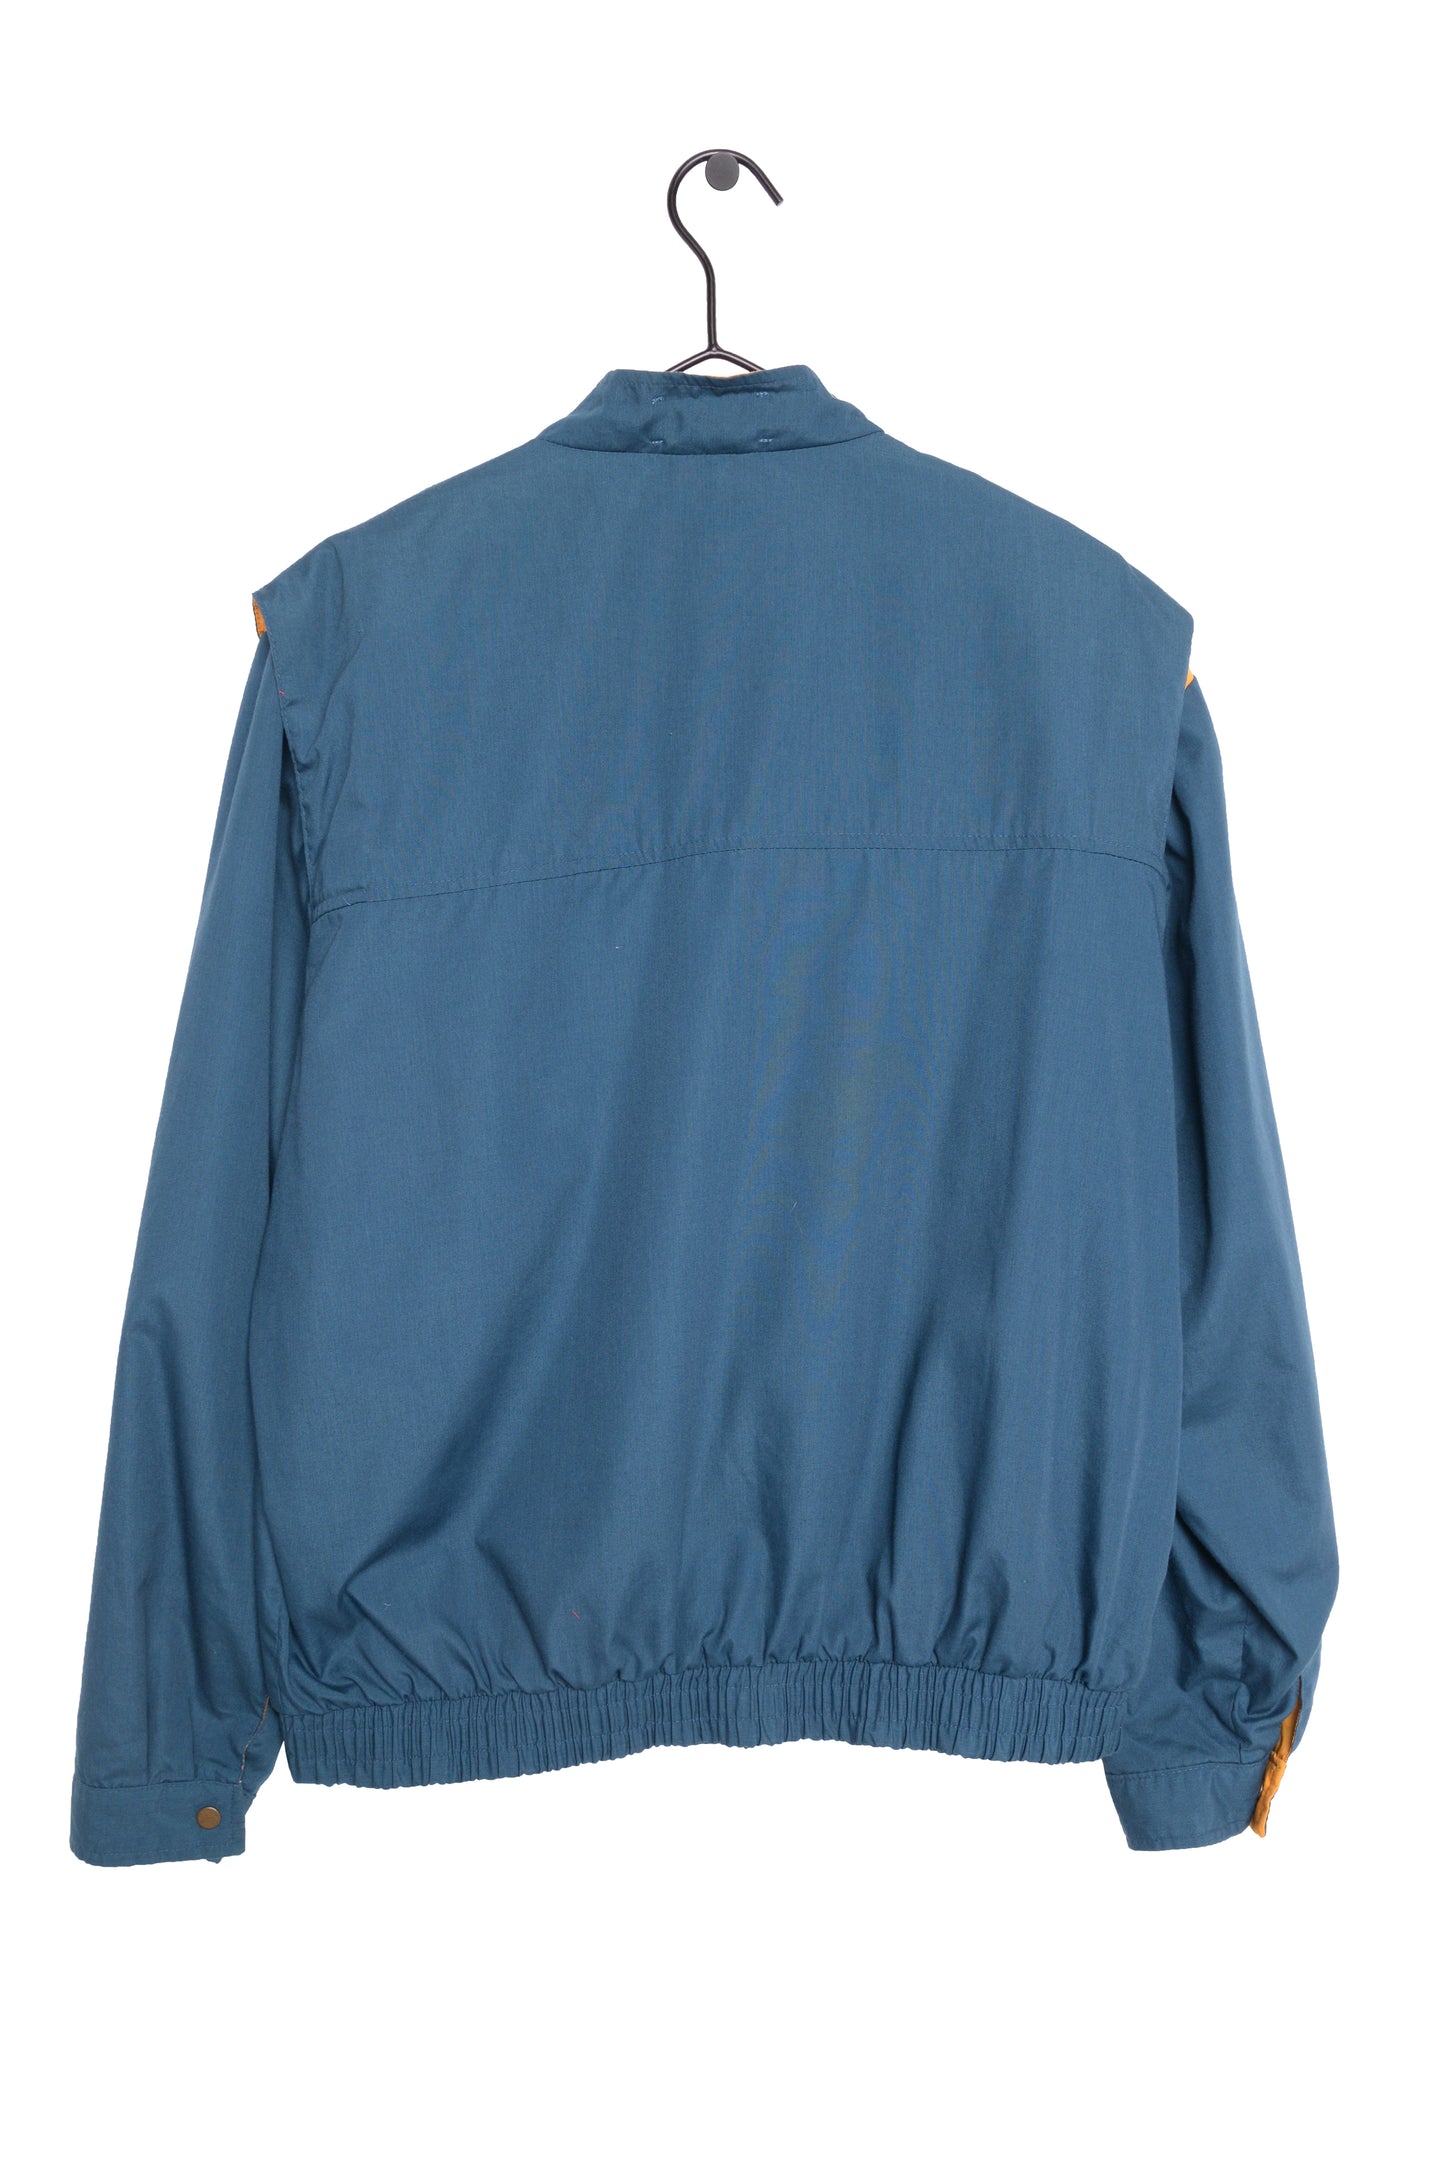 1980s Nylon Jacket